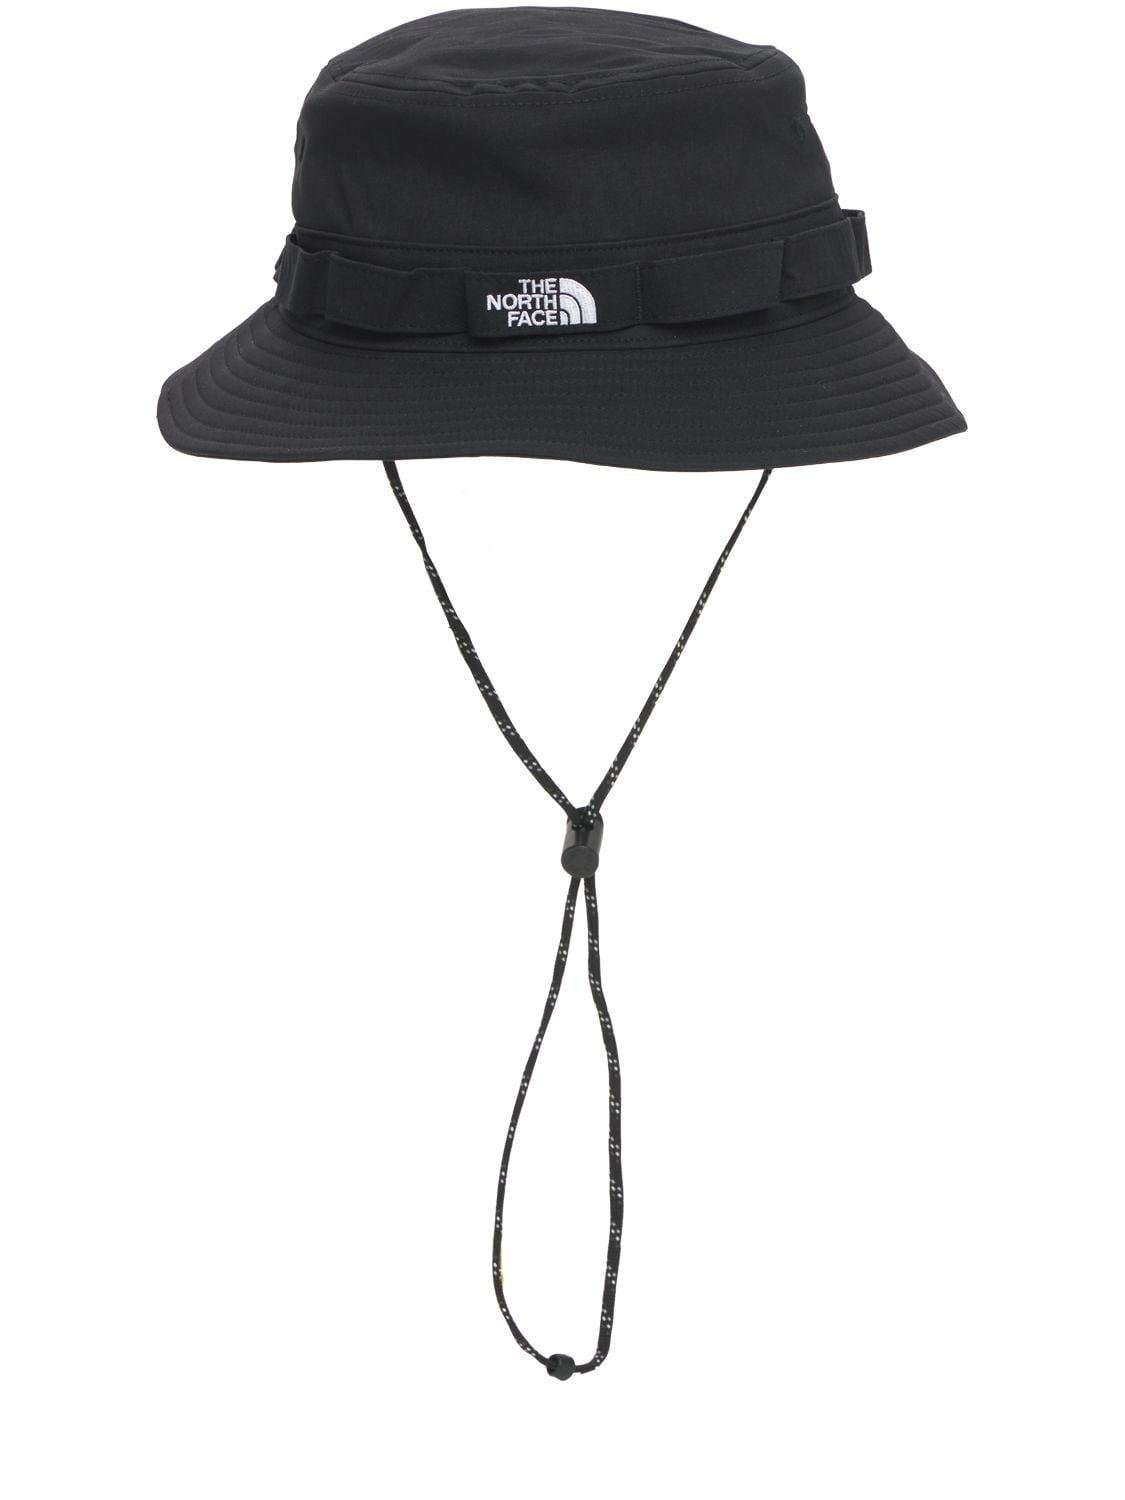 https://cdna.lystit.com/photos/lvr/27e21aba/the-north-face-Tnf-Black-Brimmer-Bucket-Hat.jpeg